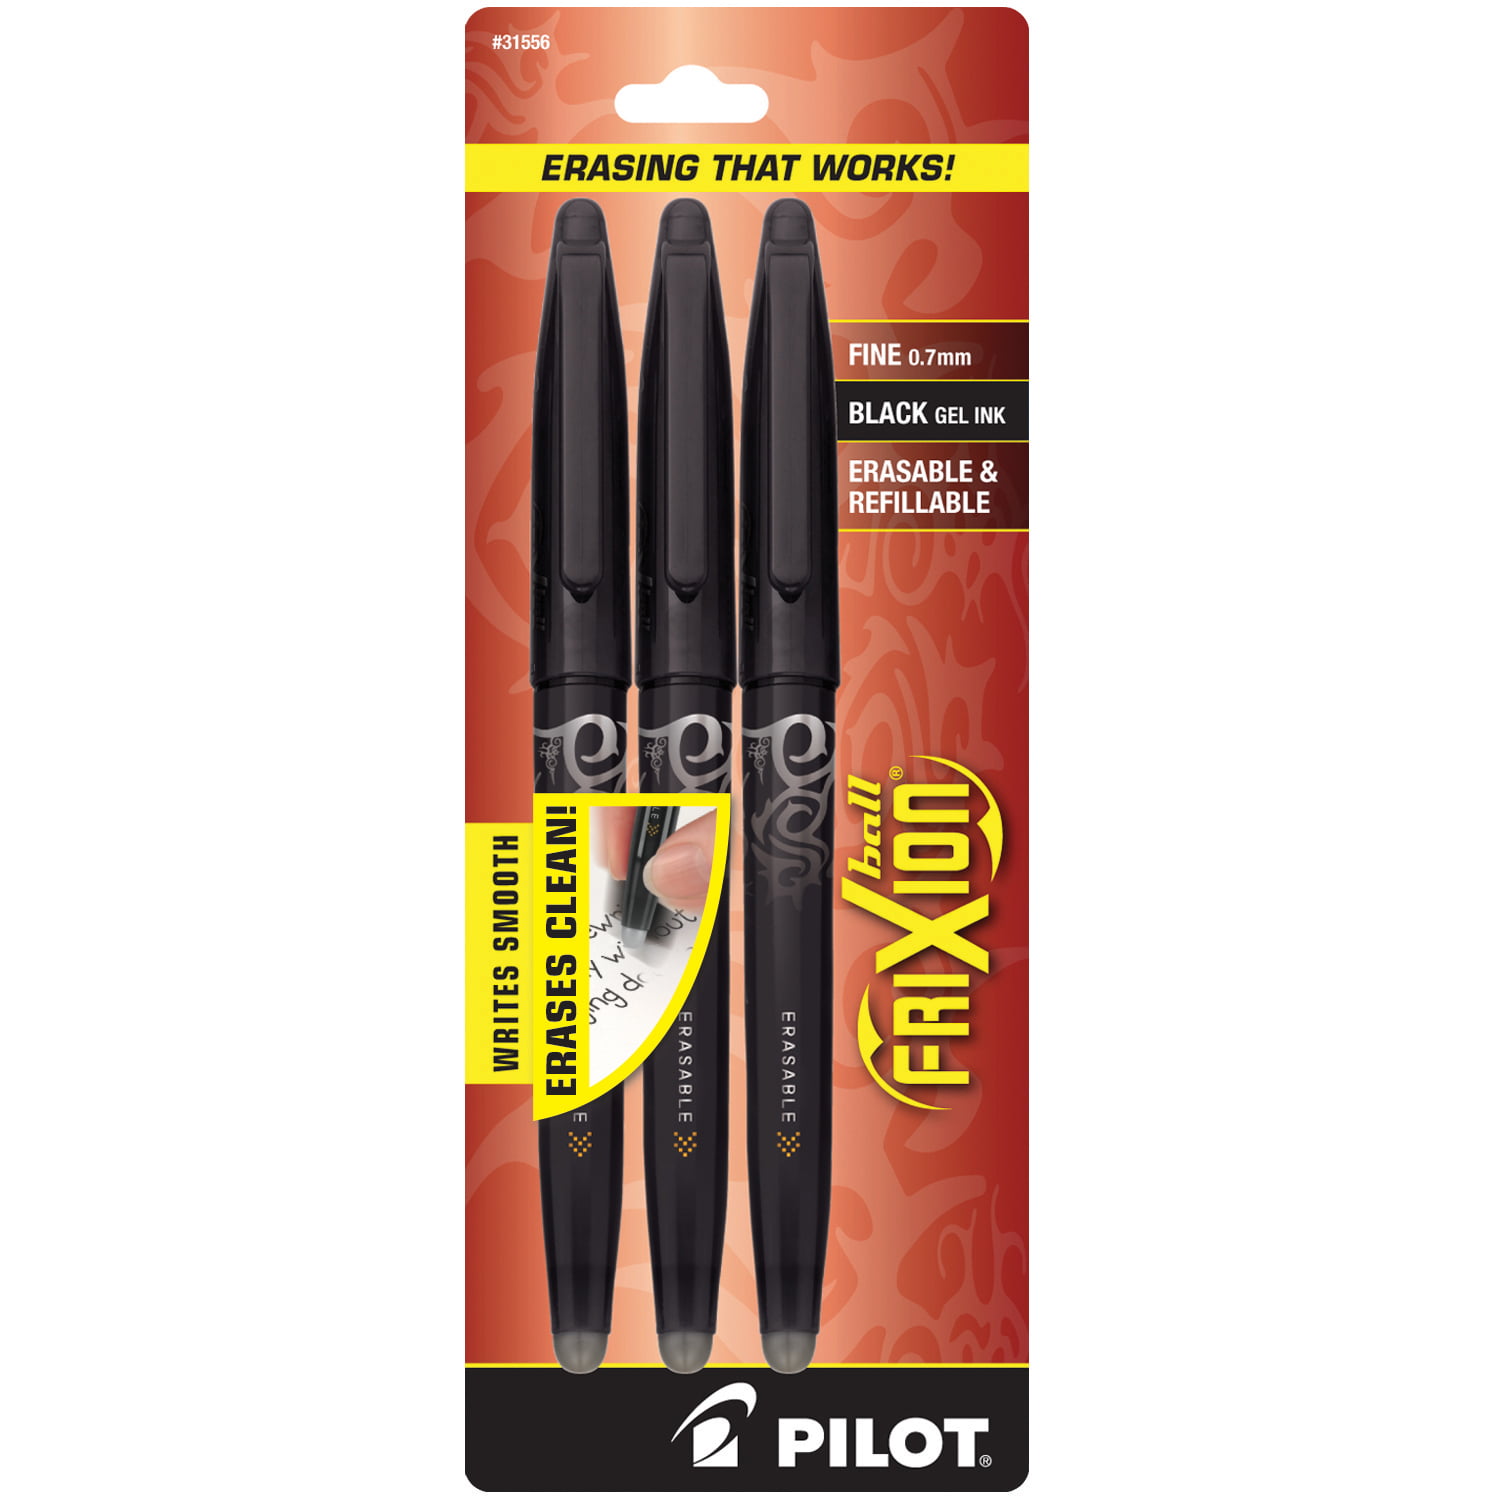 5 Pens Pilot FriXion Ball 0.7mm Erasable Rollerball Pen w/ Cap 3 Refills B 